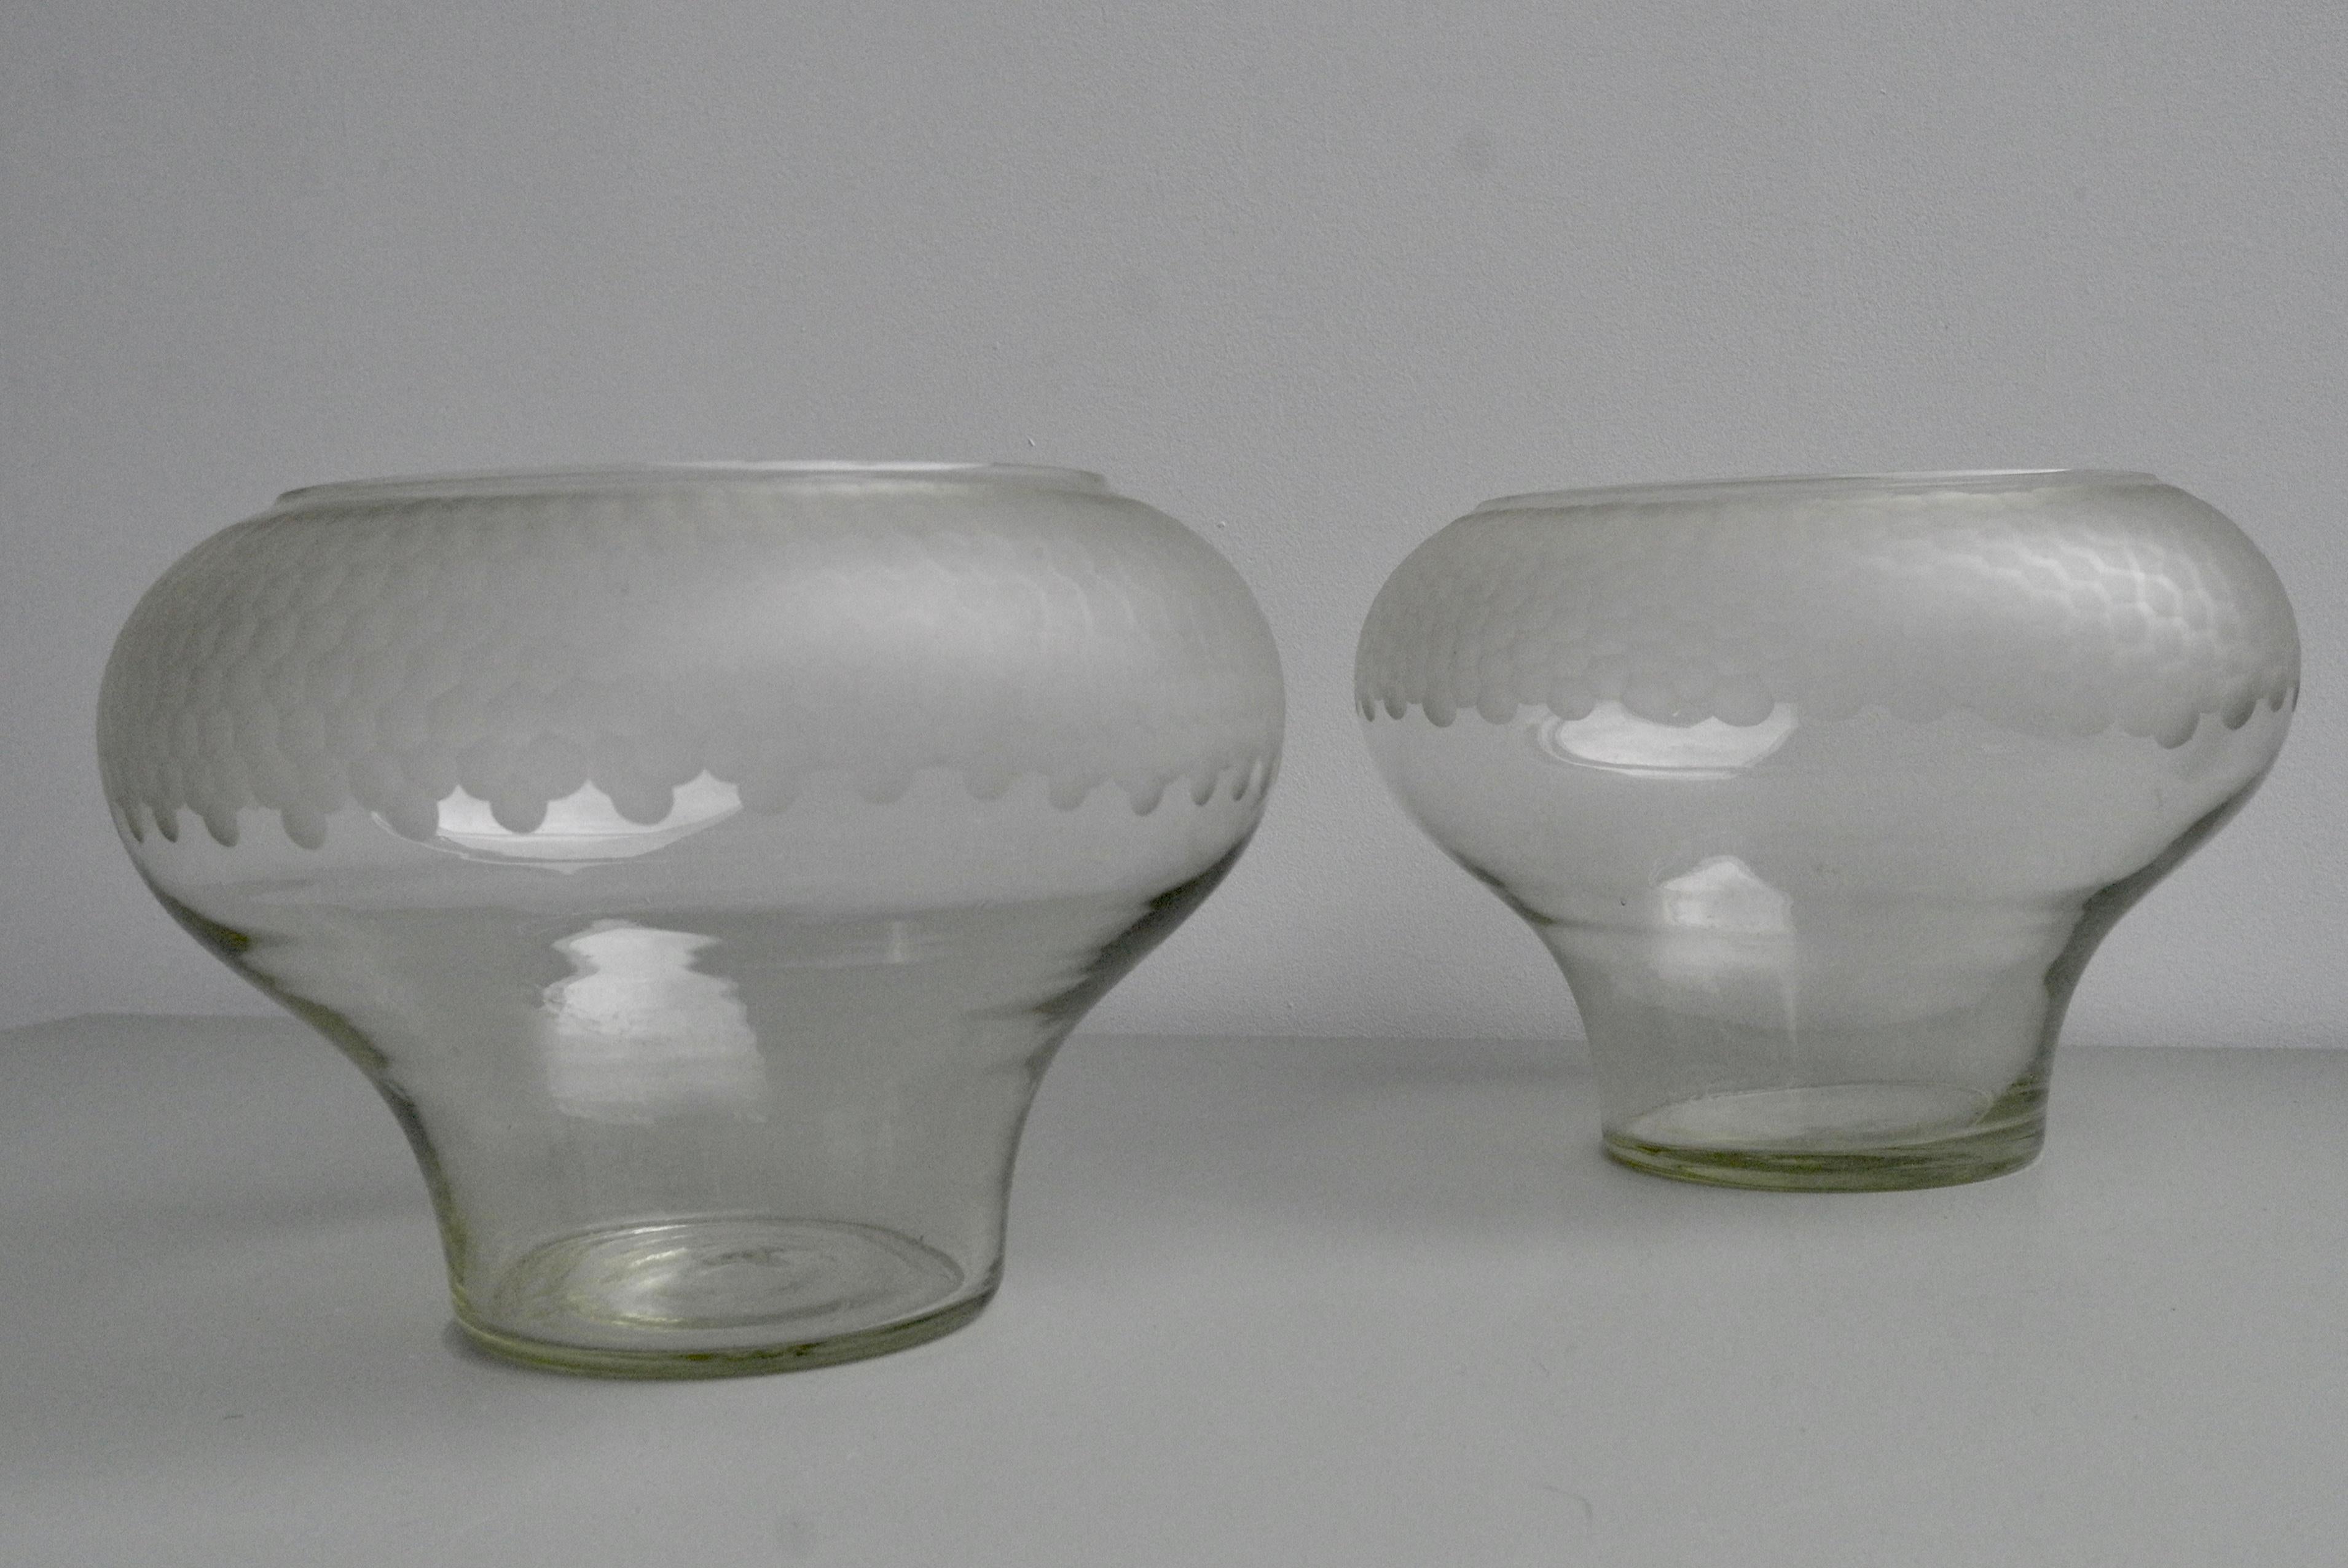 Pair of large decorative honeycomb midcentury glass bowl vases.